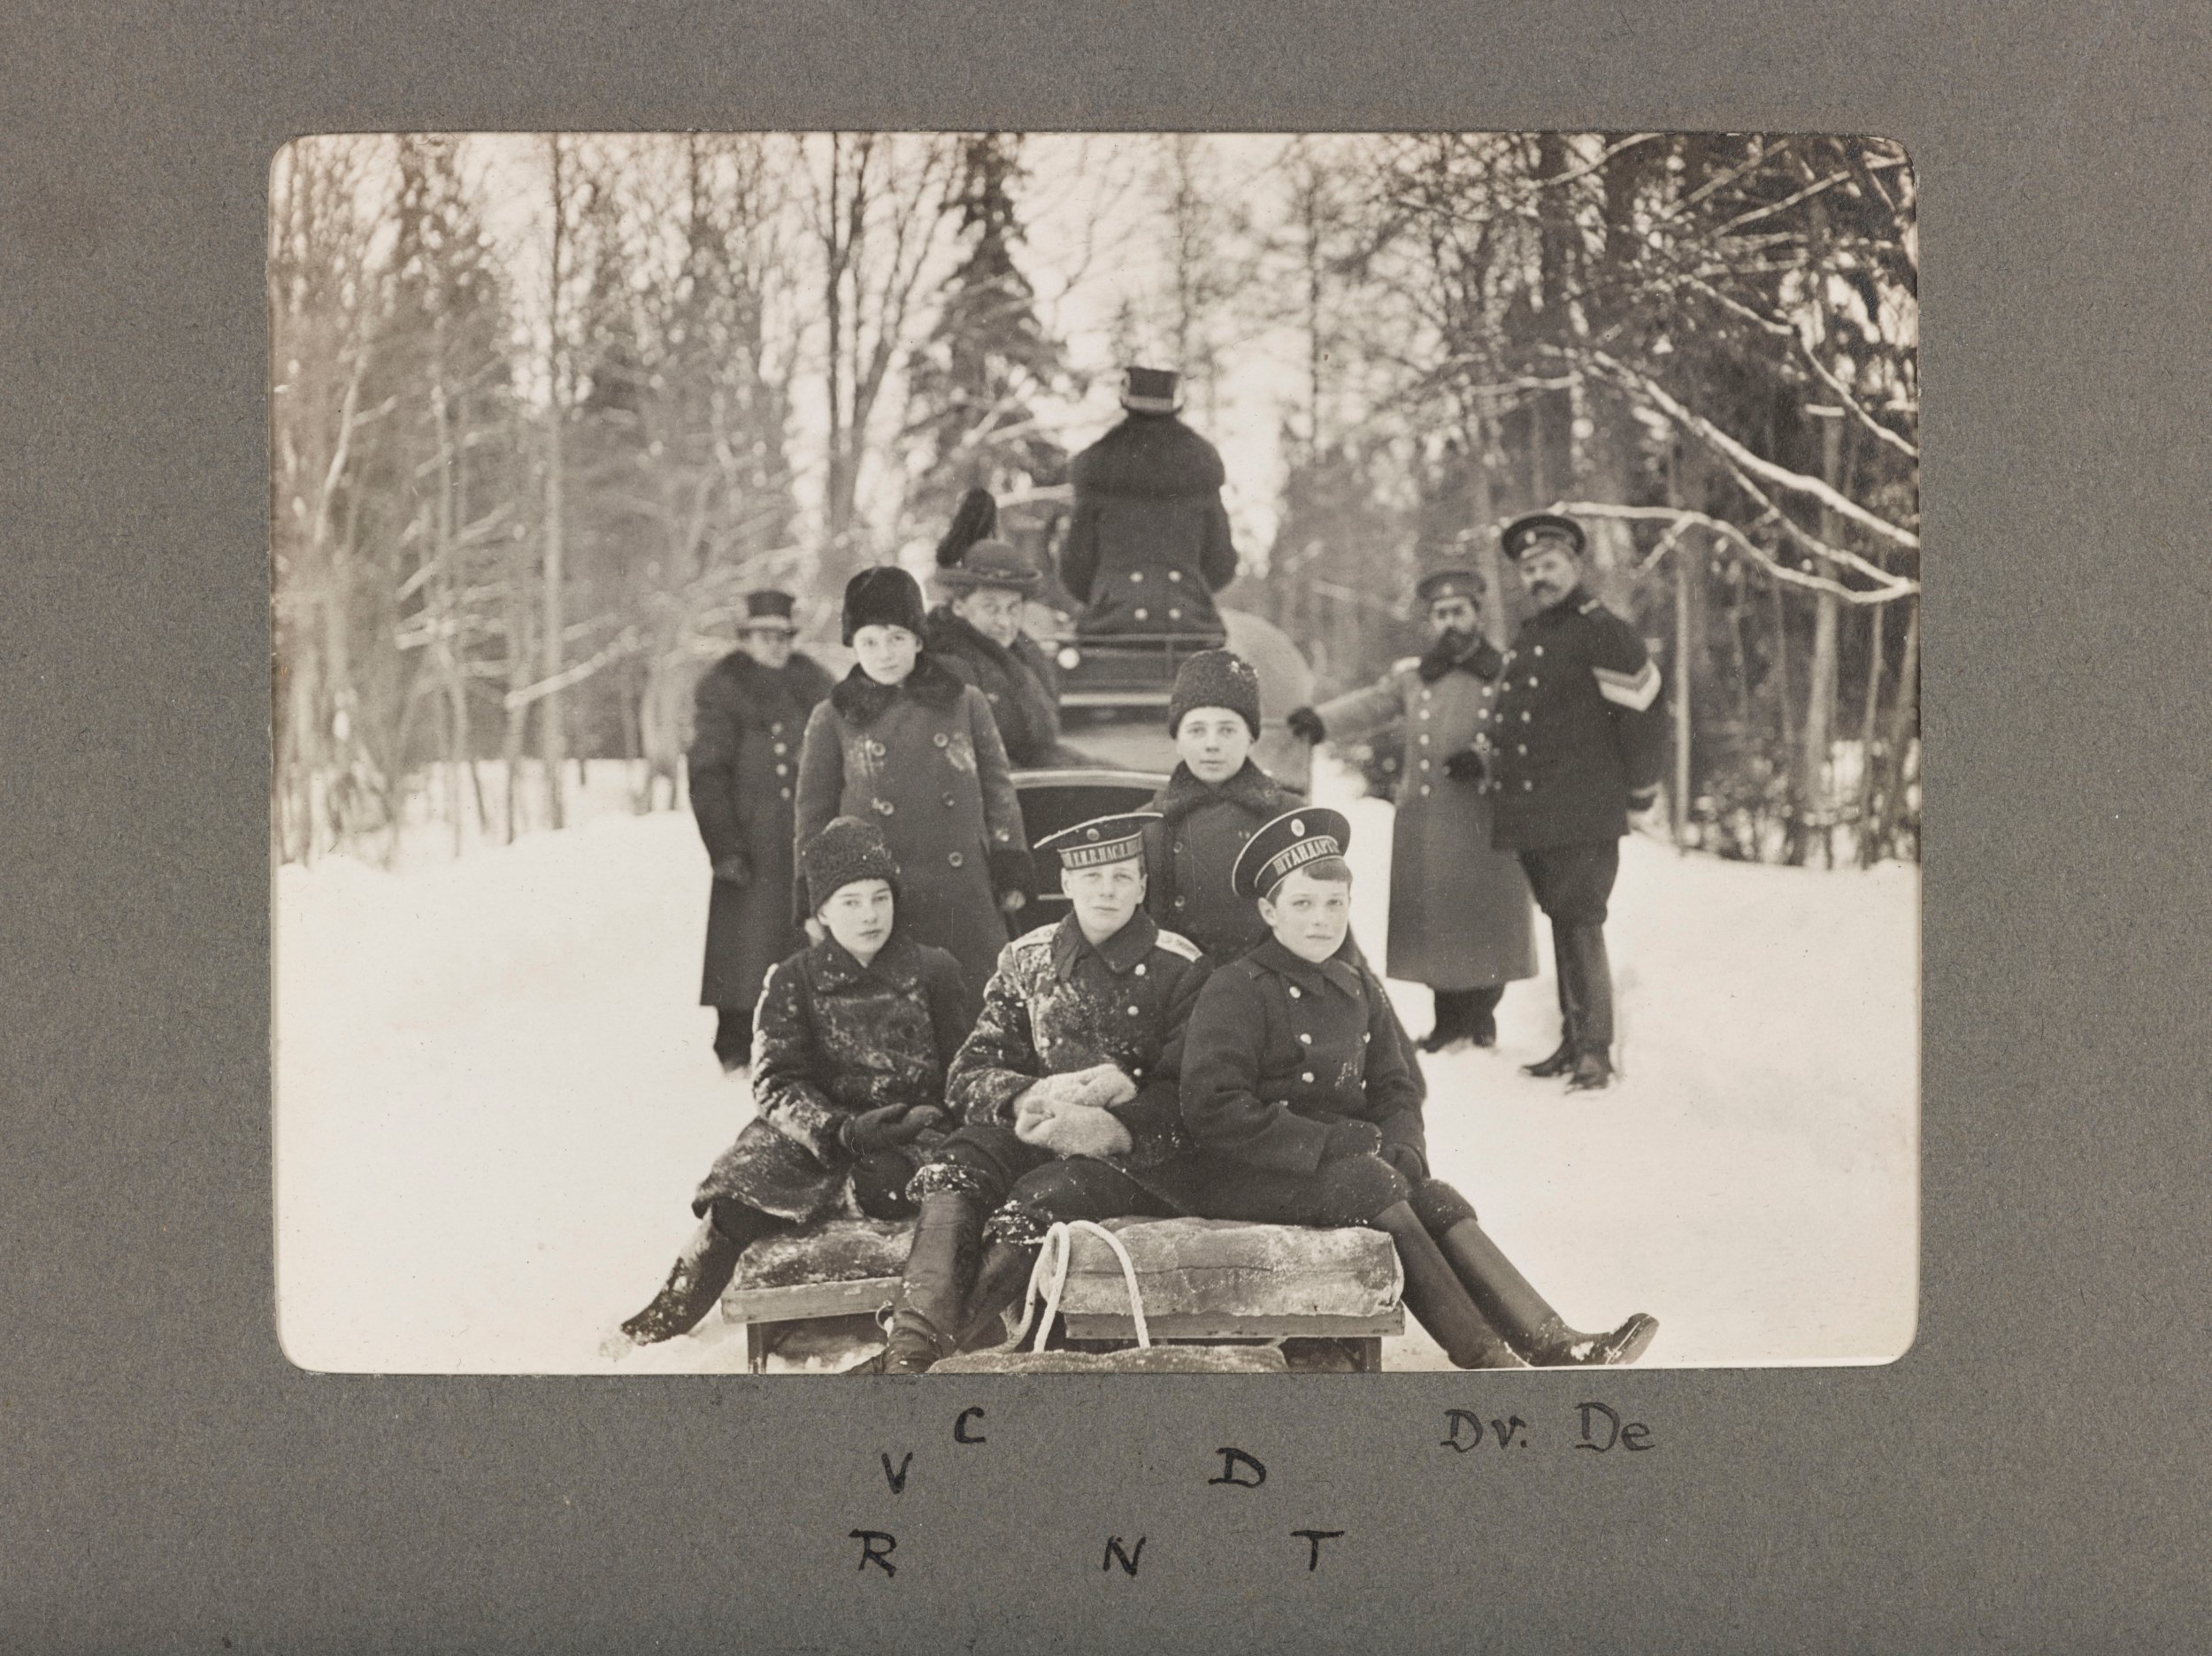 Царское Село в снегу, Санкт-Петербург, 1915. Science Museum Group Collection